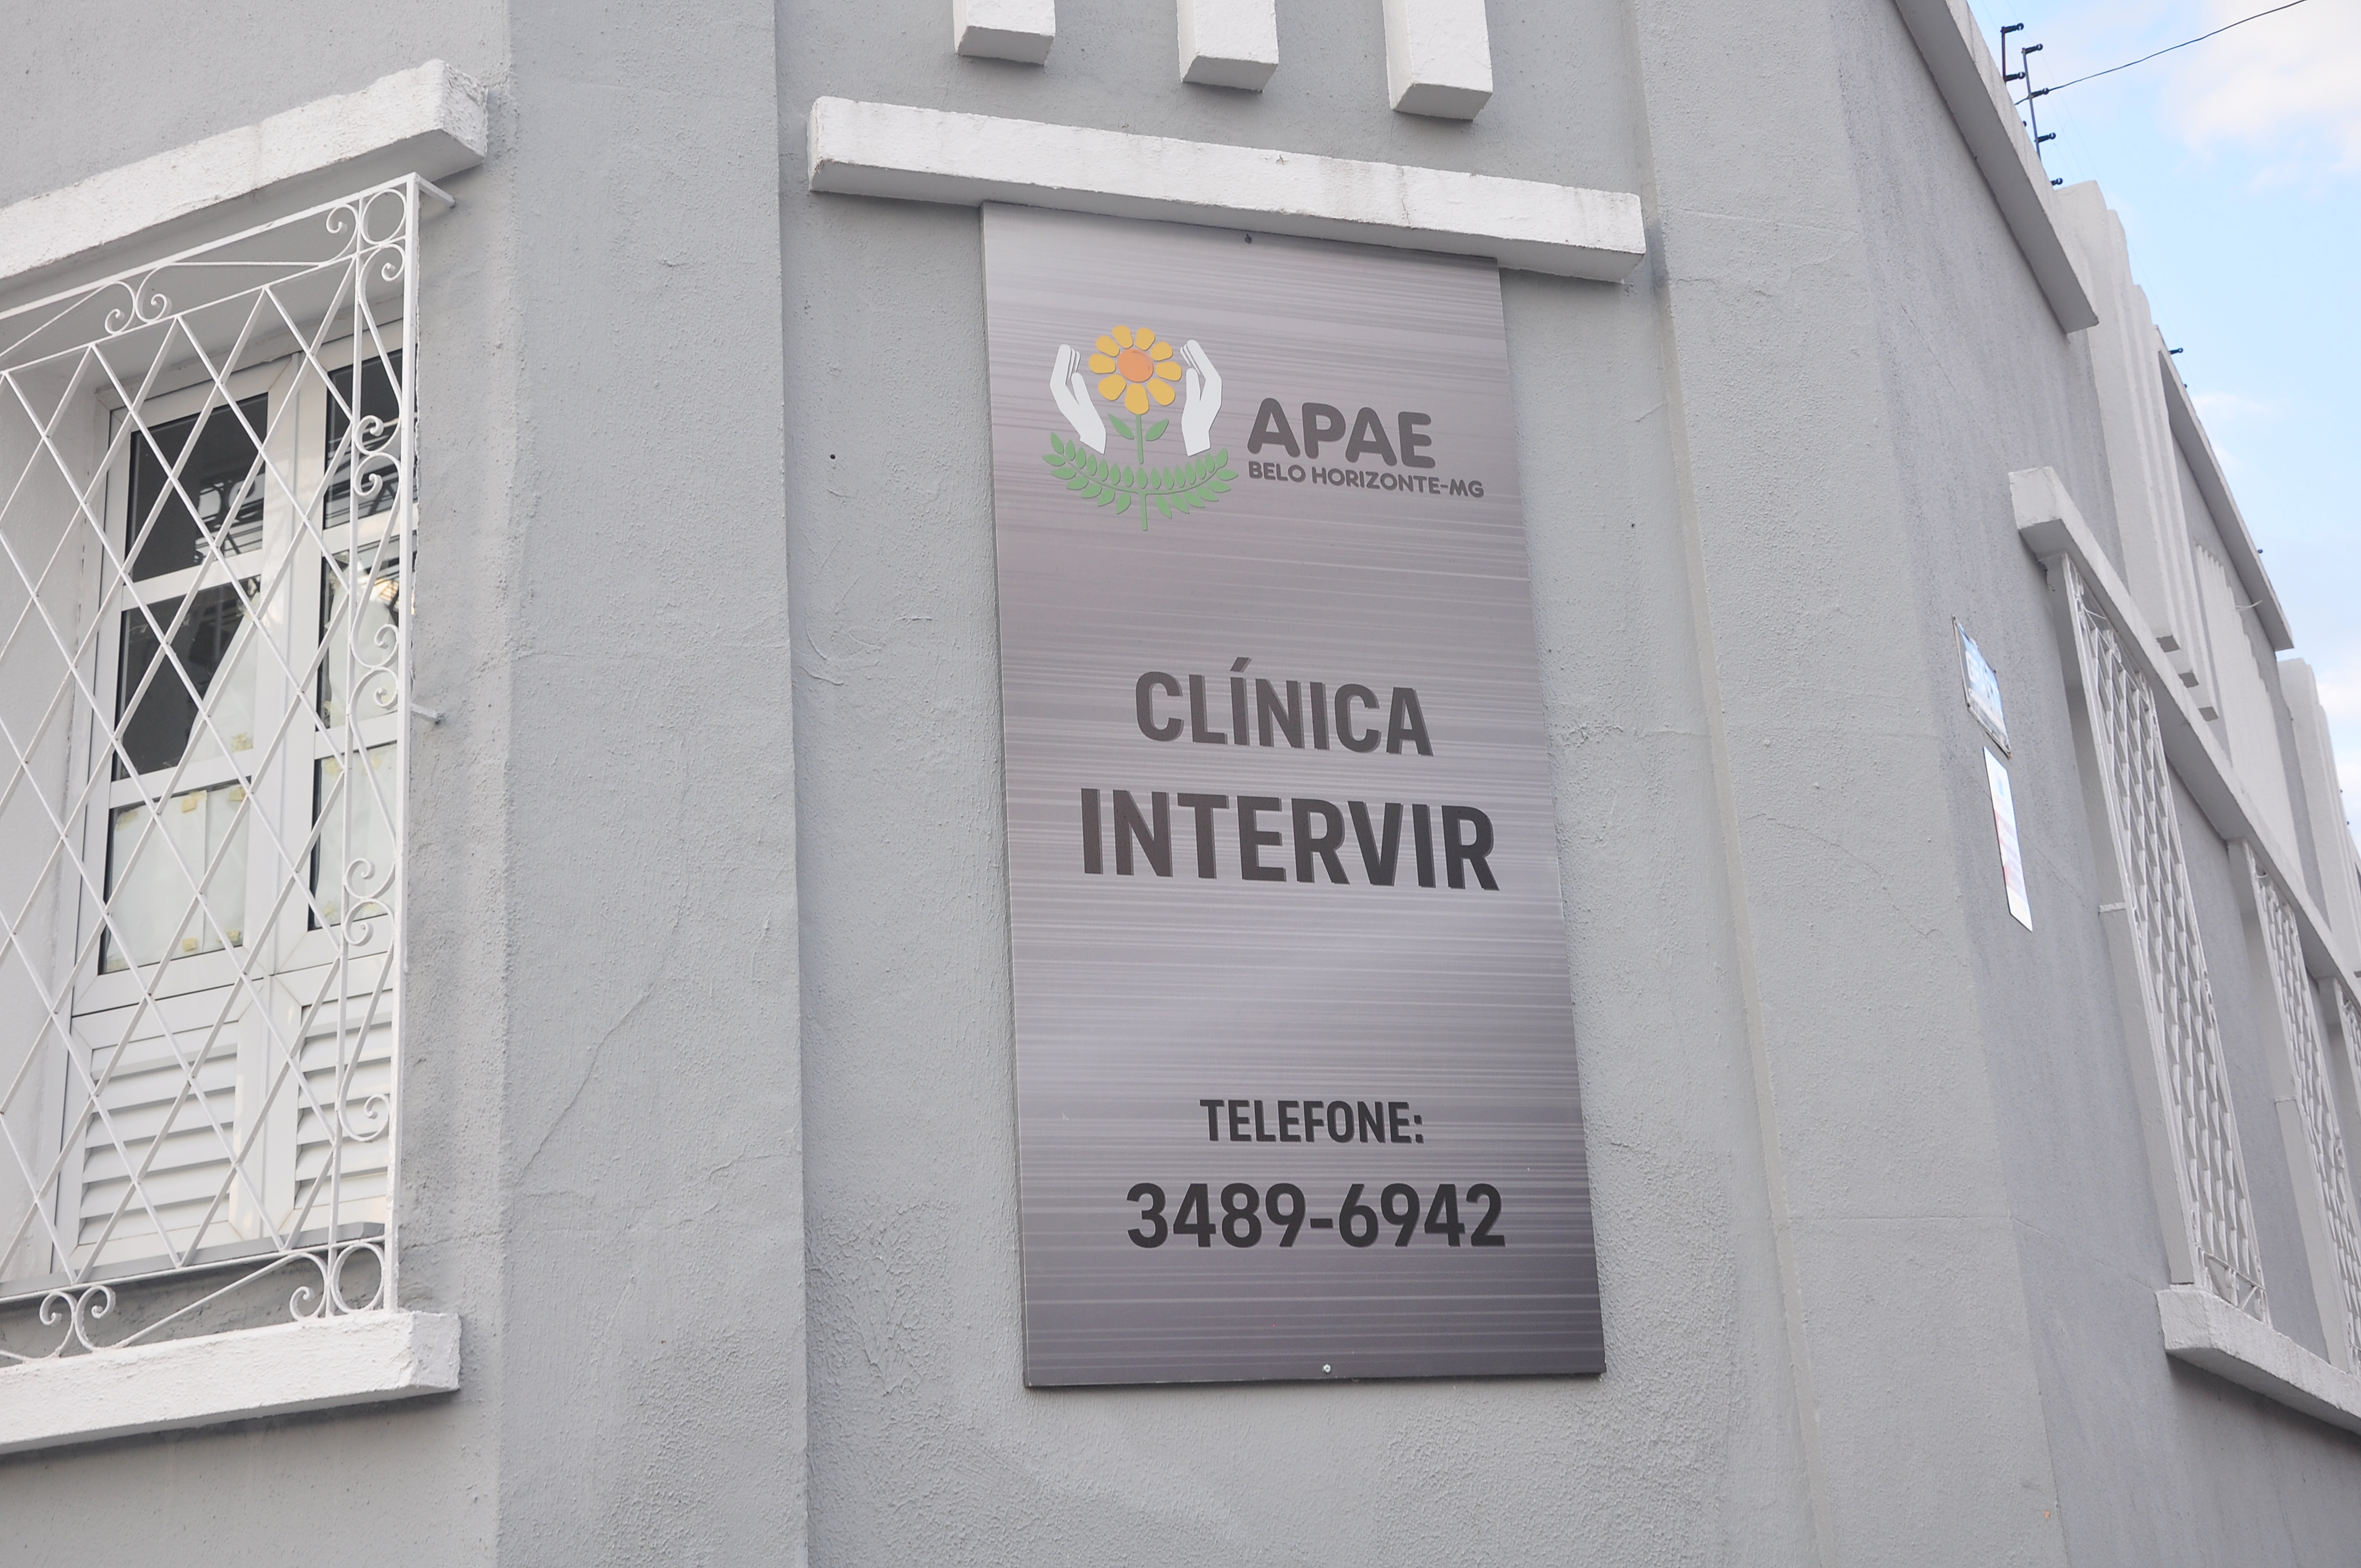 Fachada da Clínica Intervir, da APAE, no bairro Santa Tereza, em Belo Horizonte/MG.